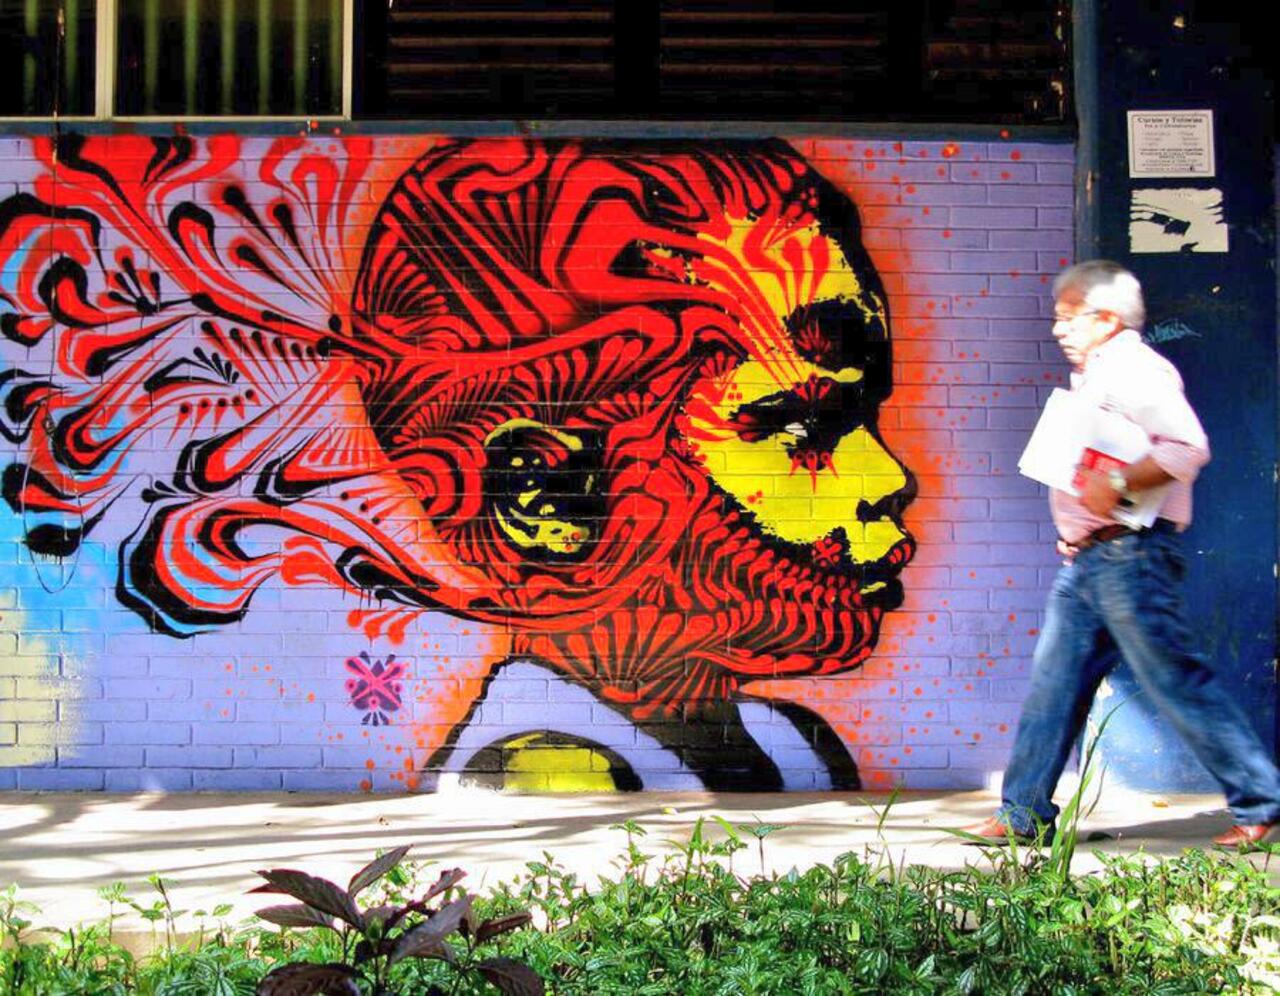 Stinkfish 
#streetart #art #graffiti #mural http://t.co/N3S0EY1LMC